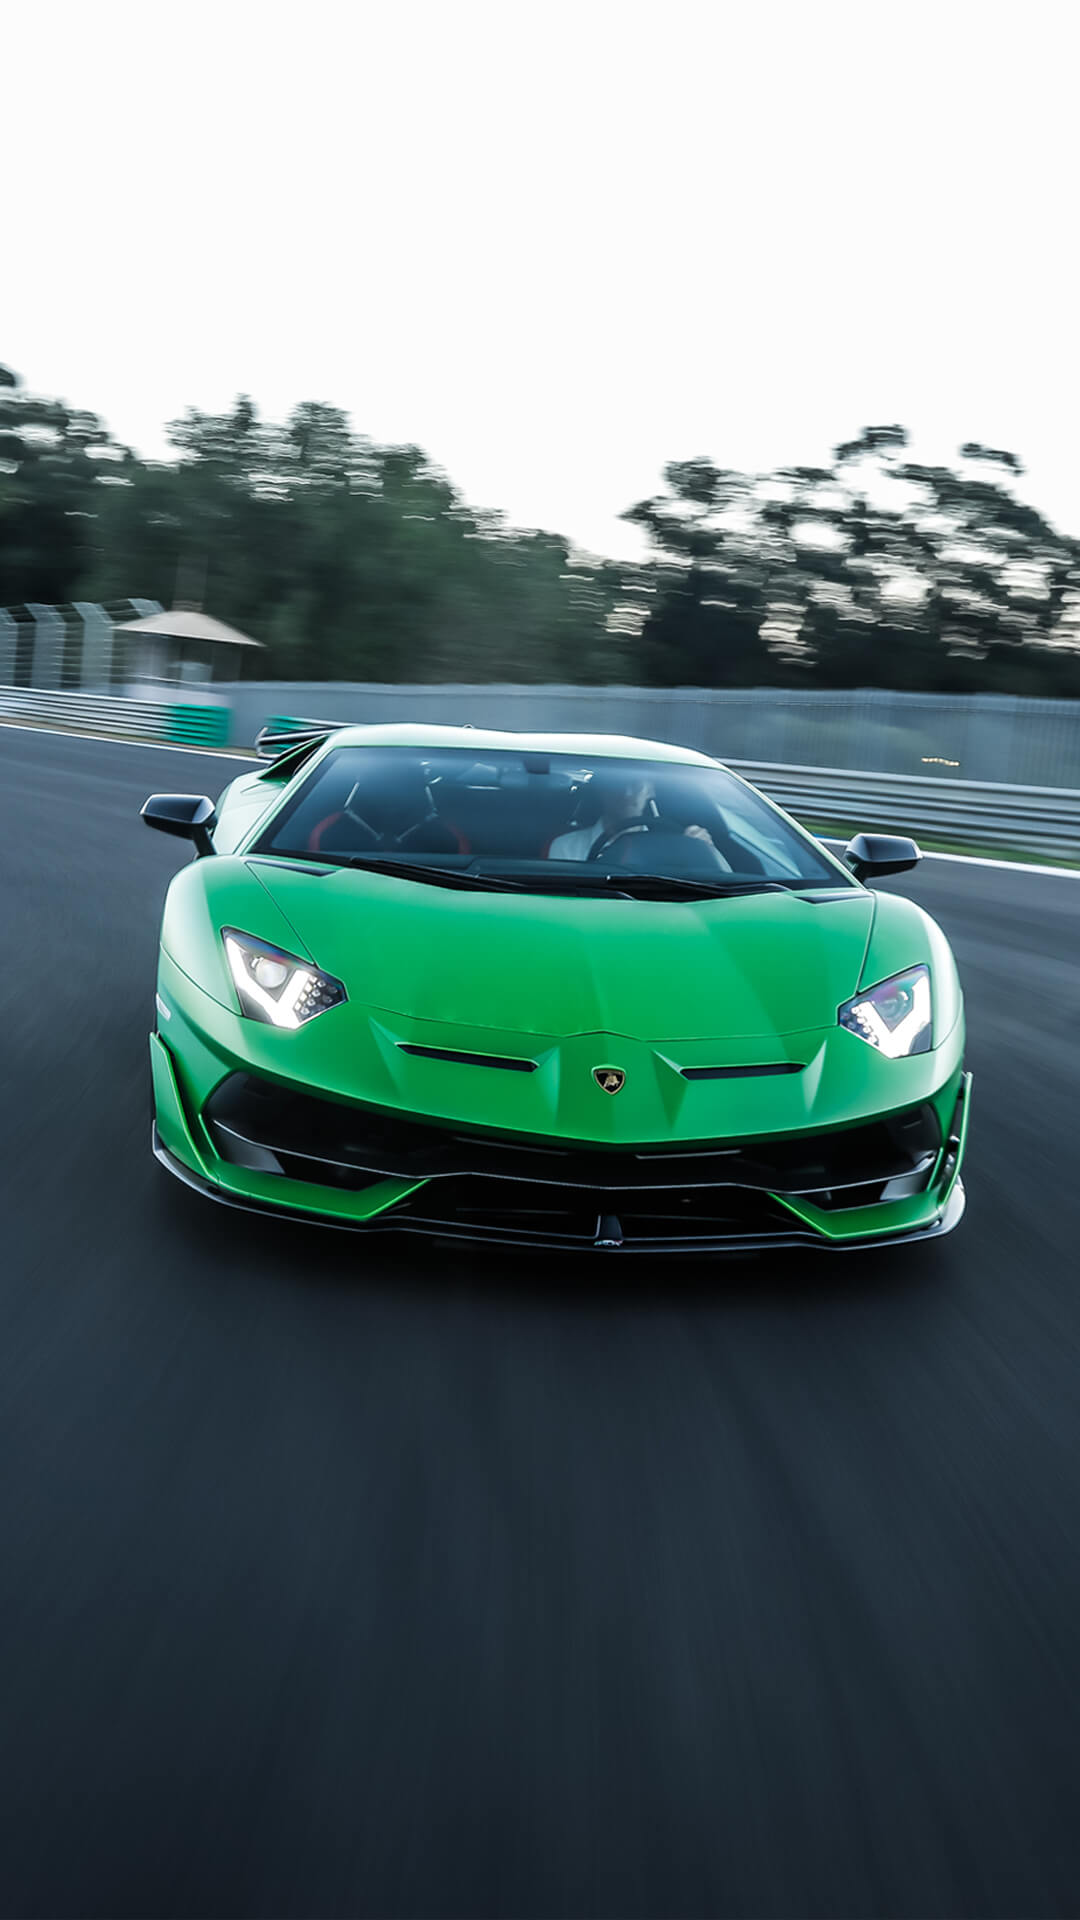 Lamborghini Aventador history, powertrain, performance